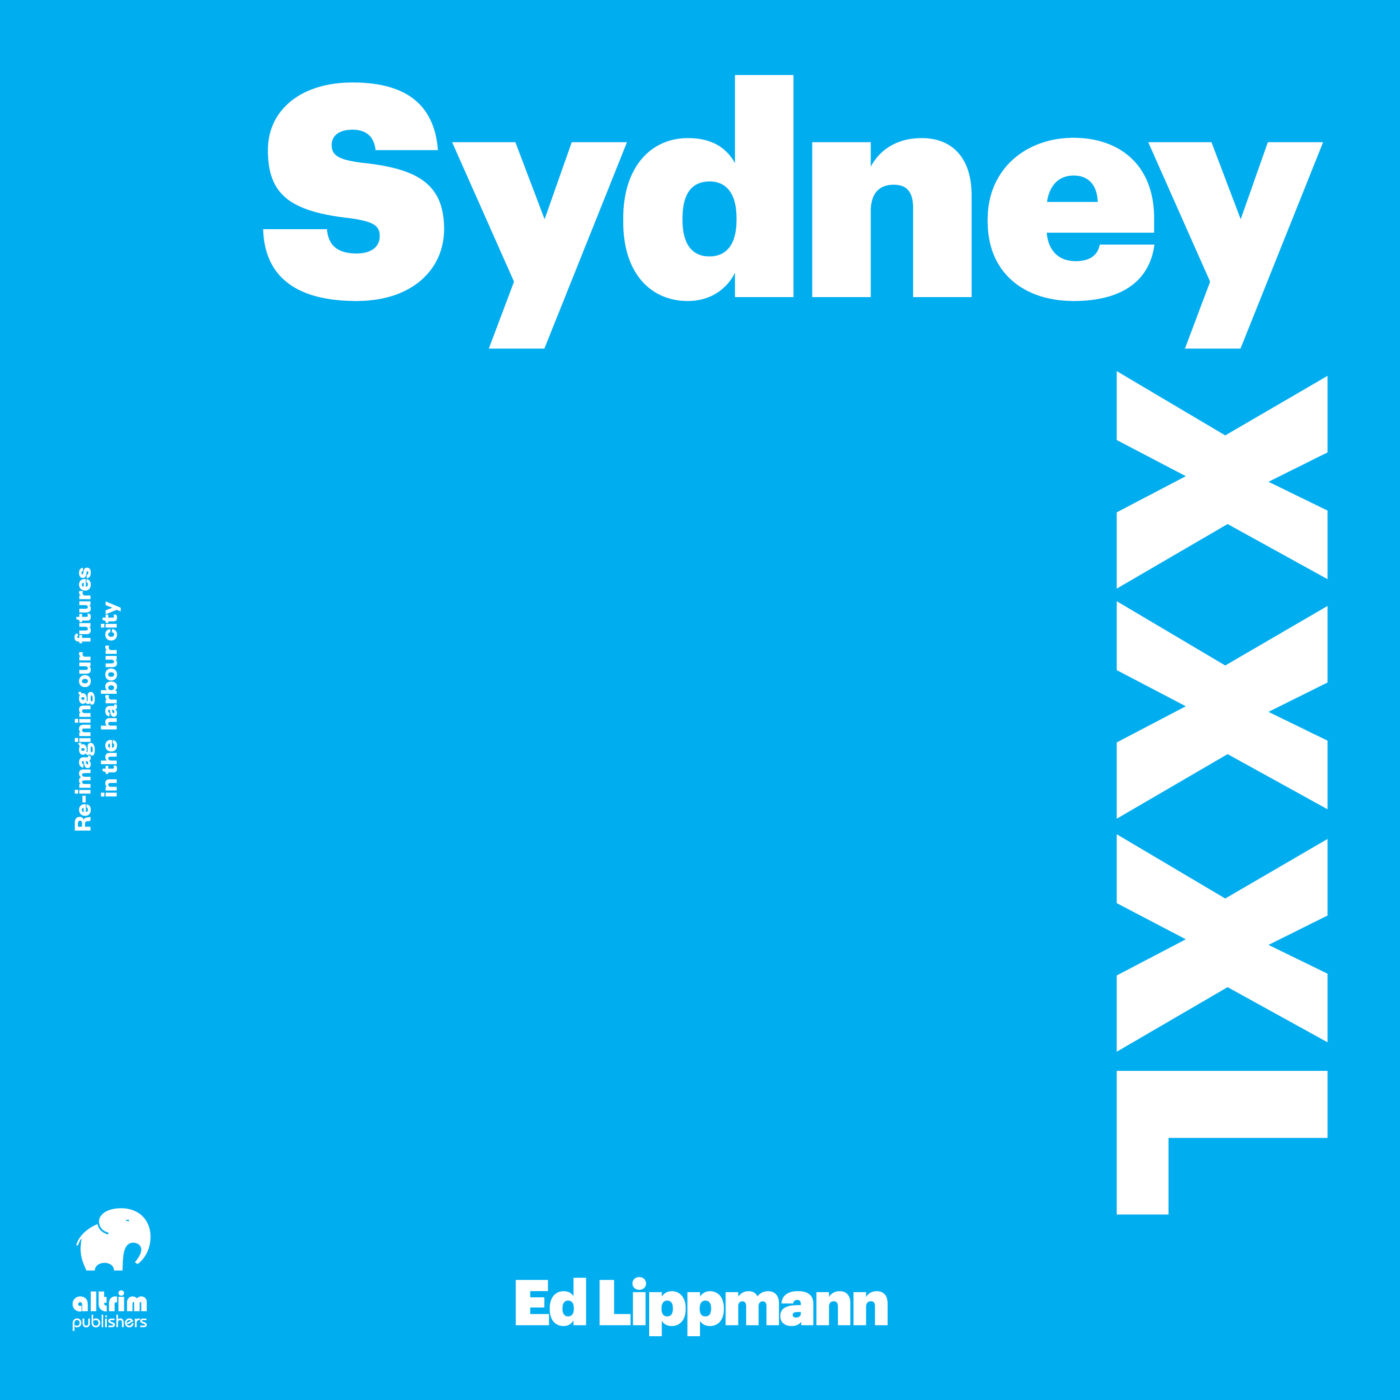 SYDNEY XXXL by Ed Lippmann book review of Sydney’s history